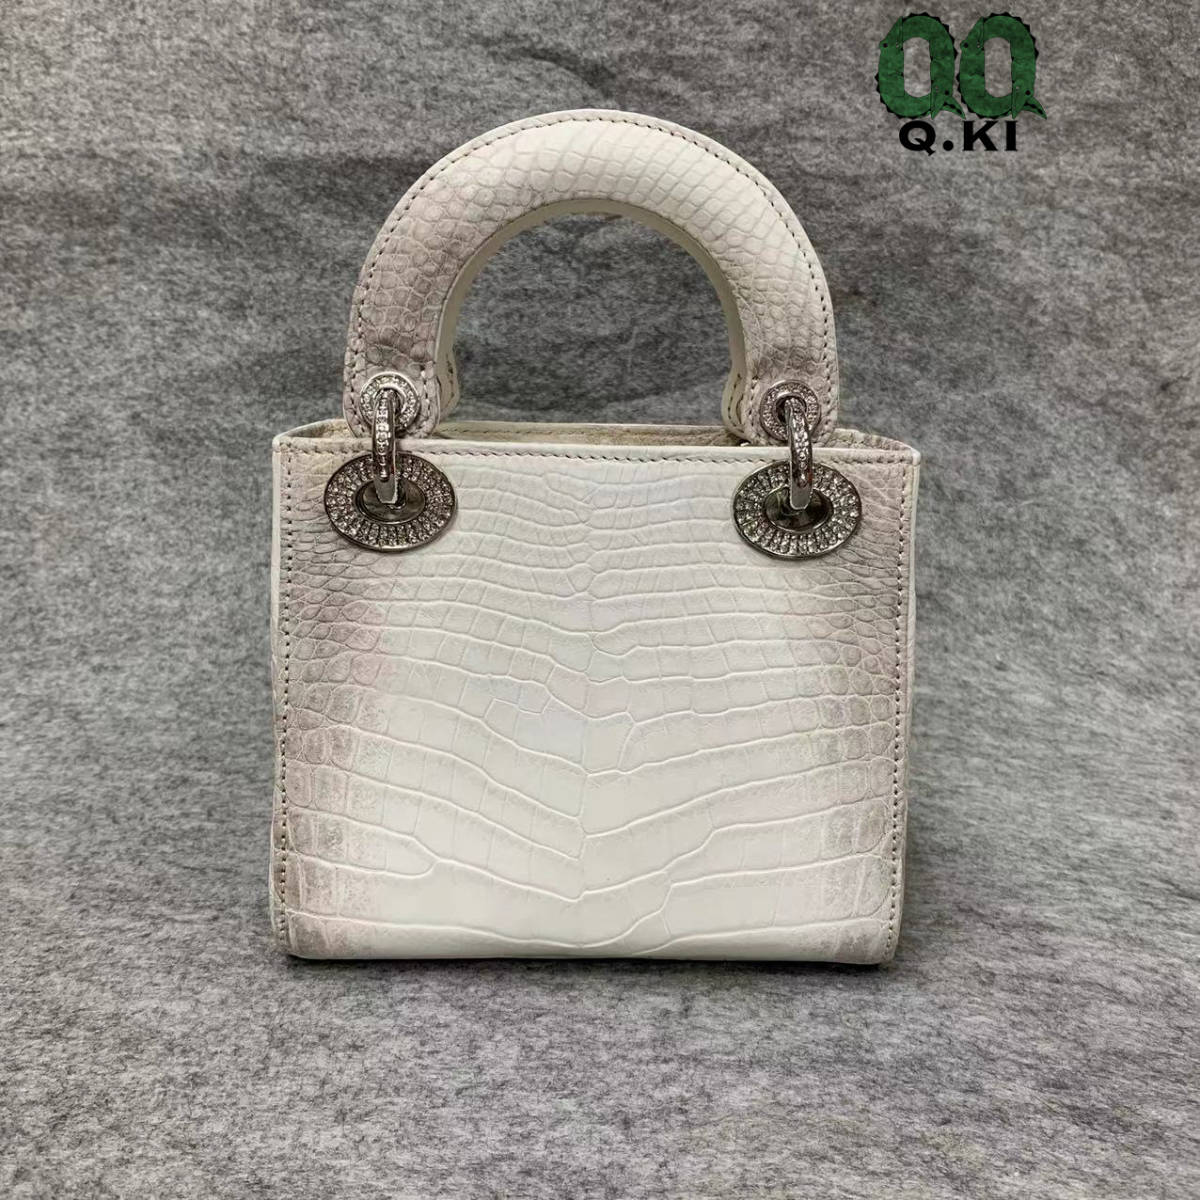 himalaya white crocodile leather wani leather genuine article . leather center taking . mat processing handbag shoulder bag beautiful color 1 point 